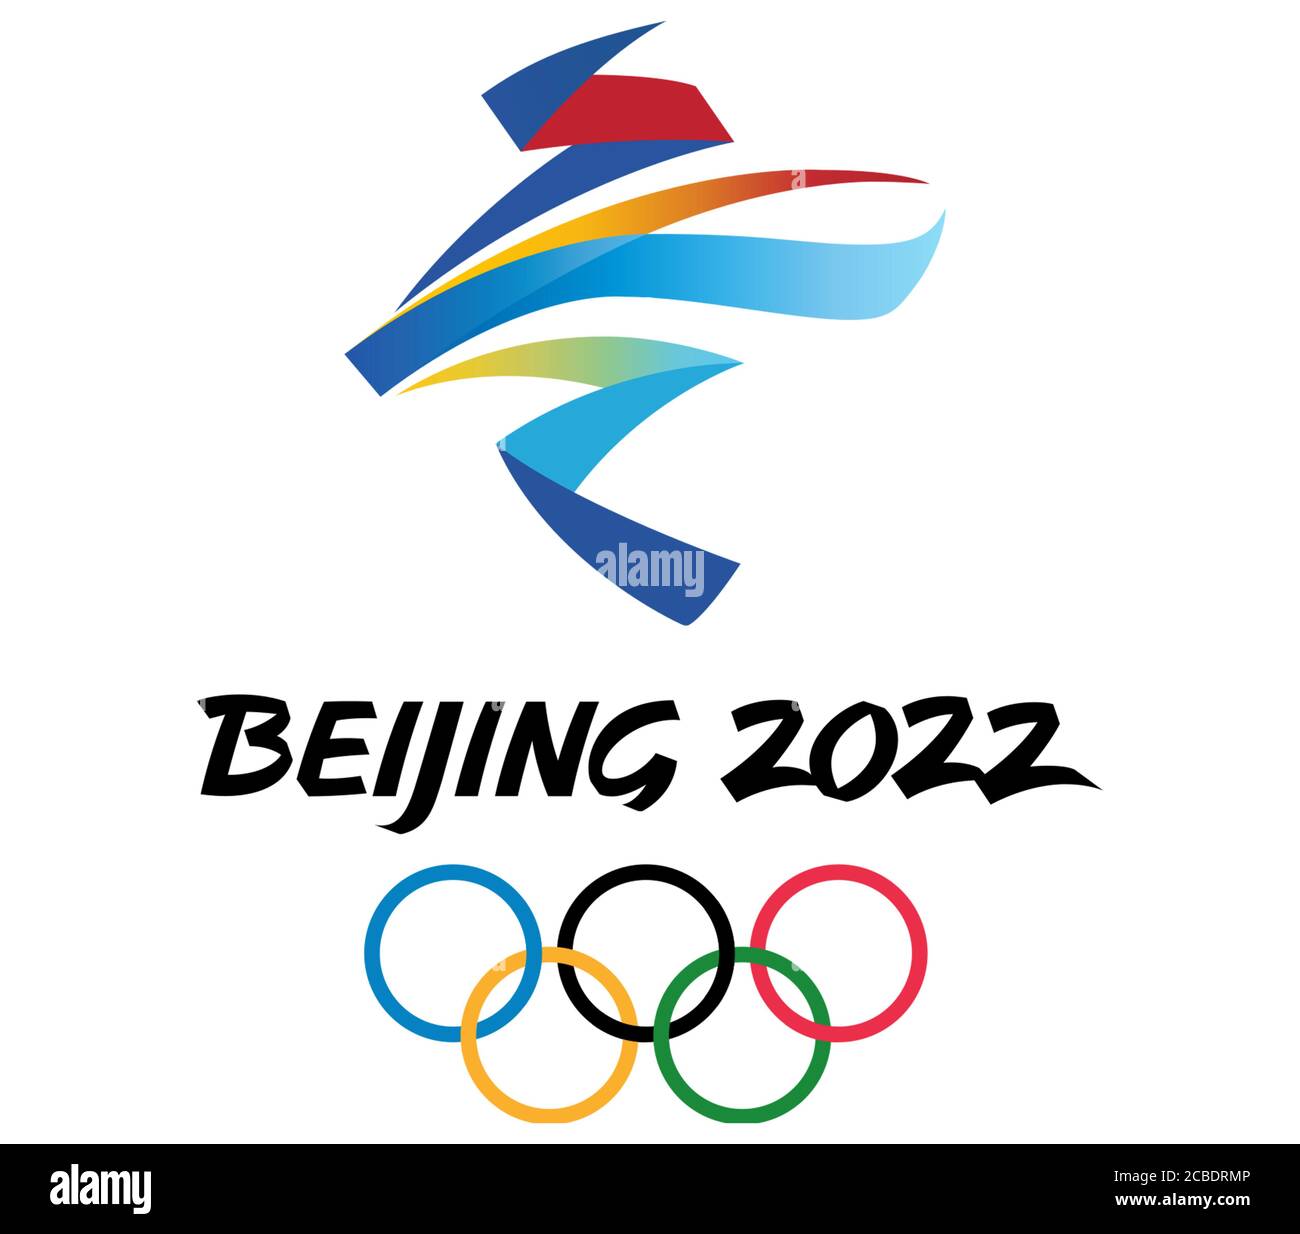 Beijing 2022 Olympic Games Stock Photo